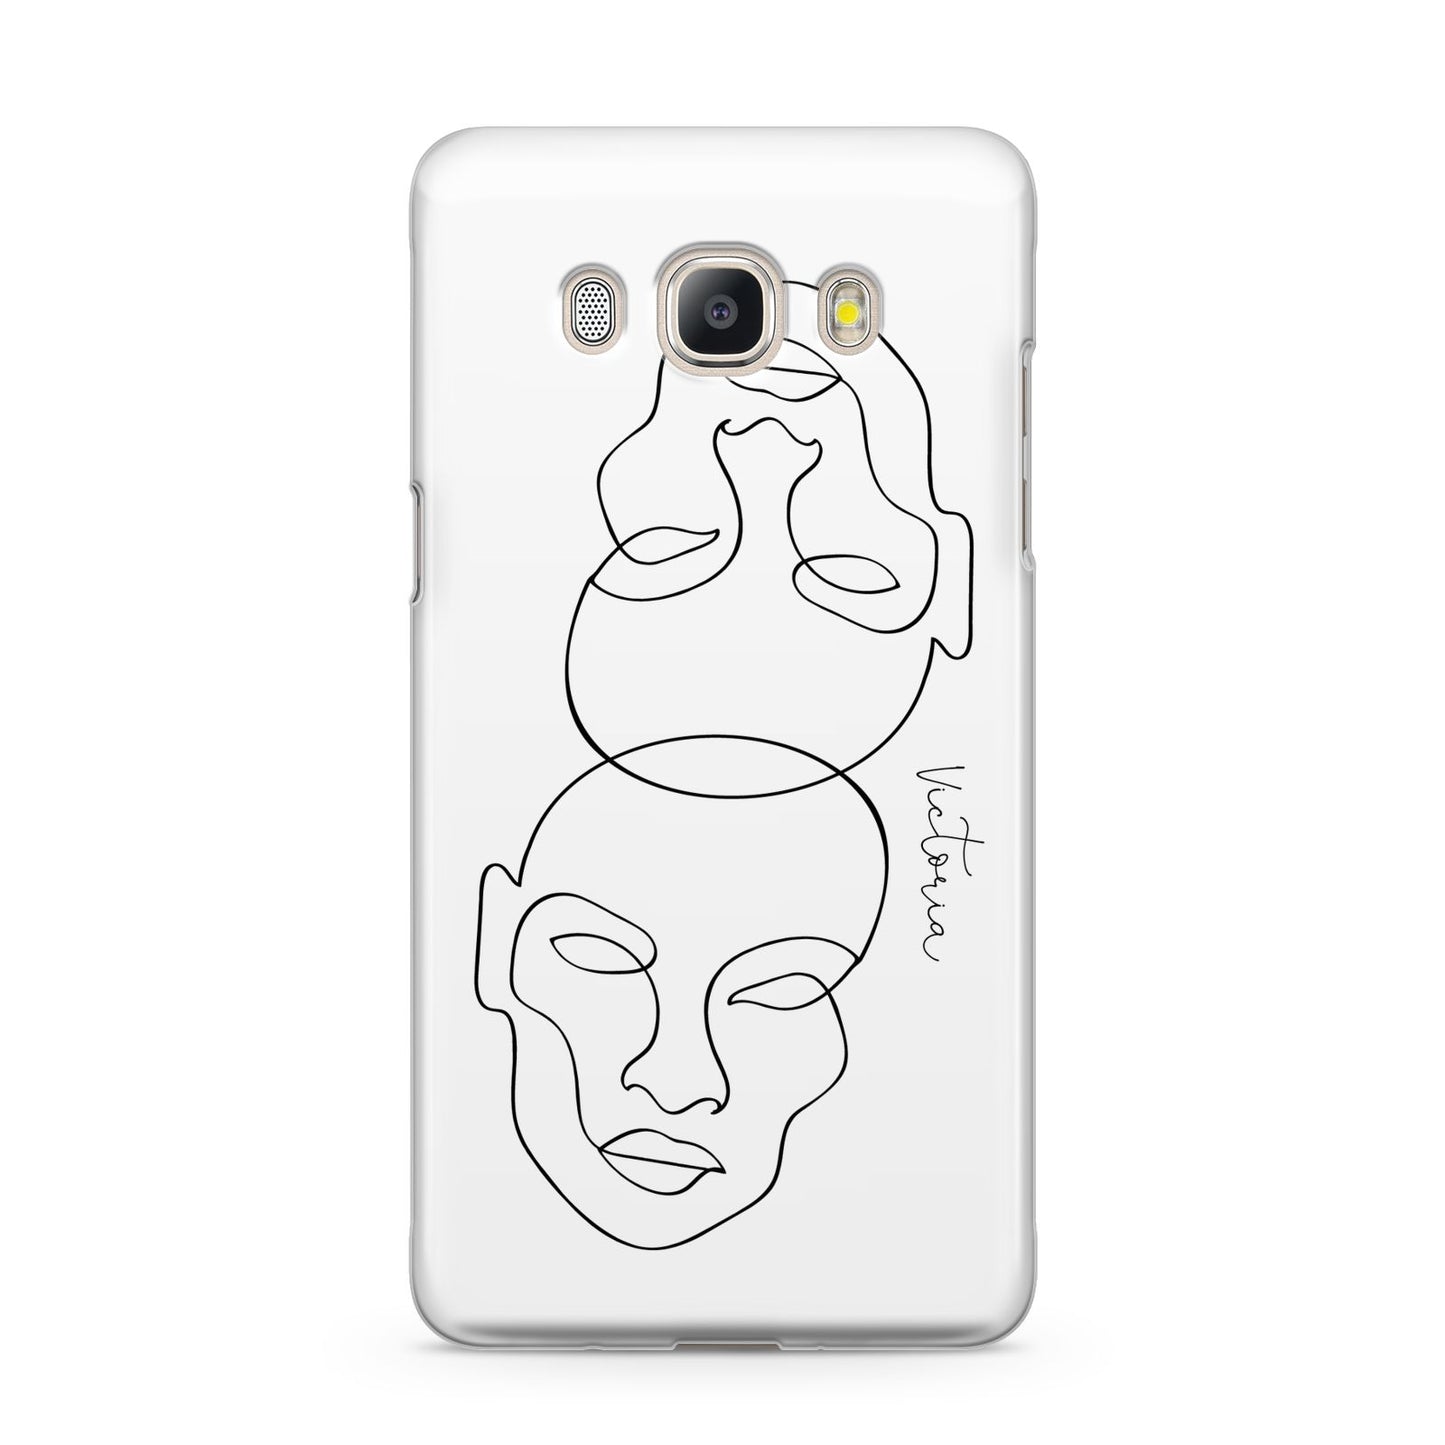 Personalised White Line Art Samsung Galaxy J5 2016 Case